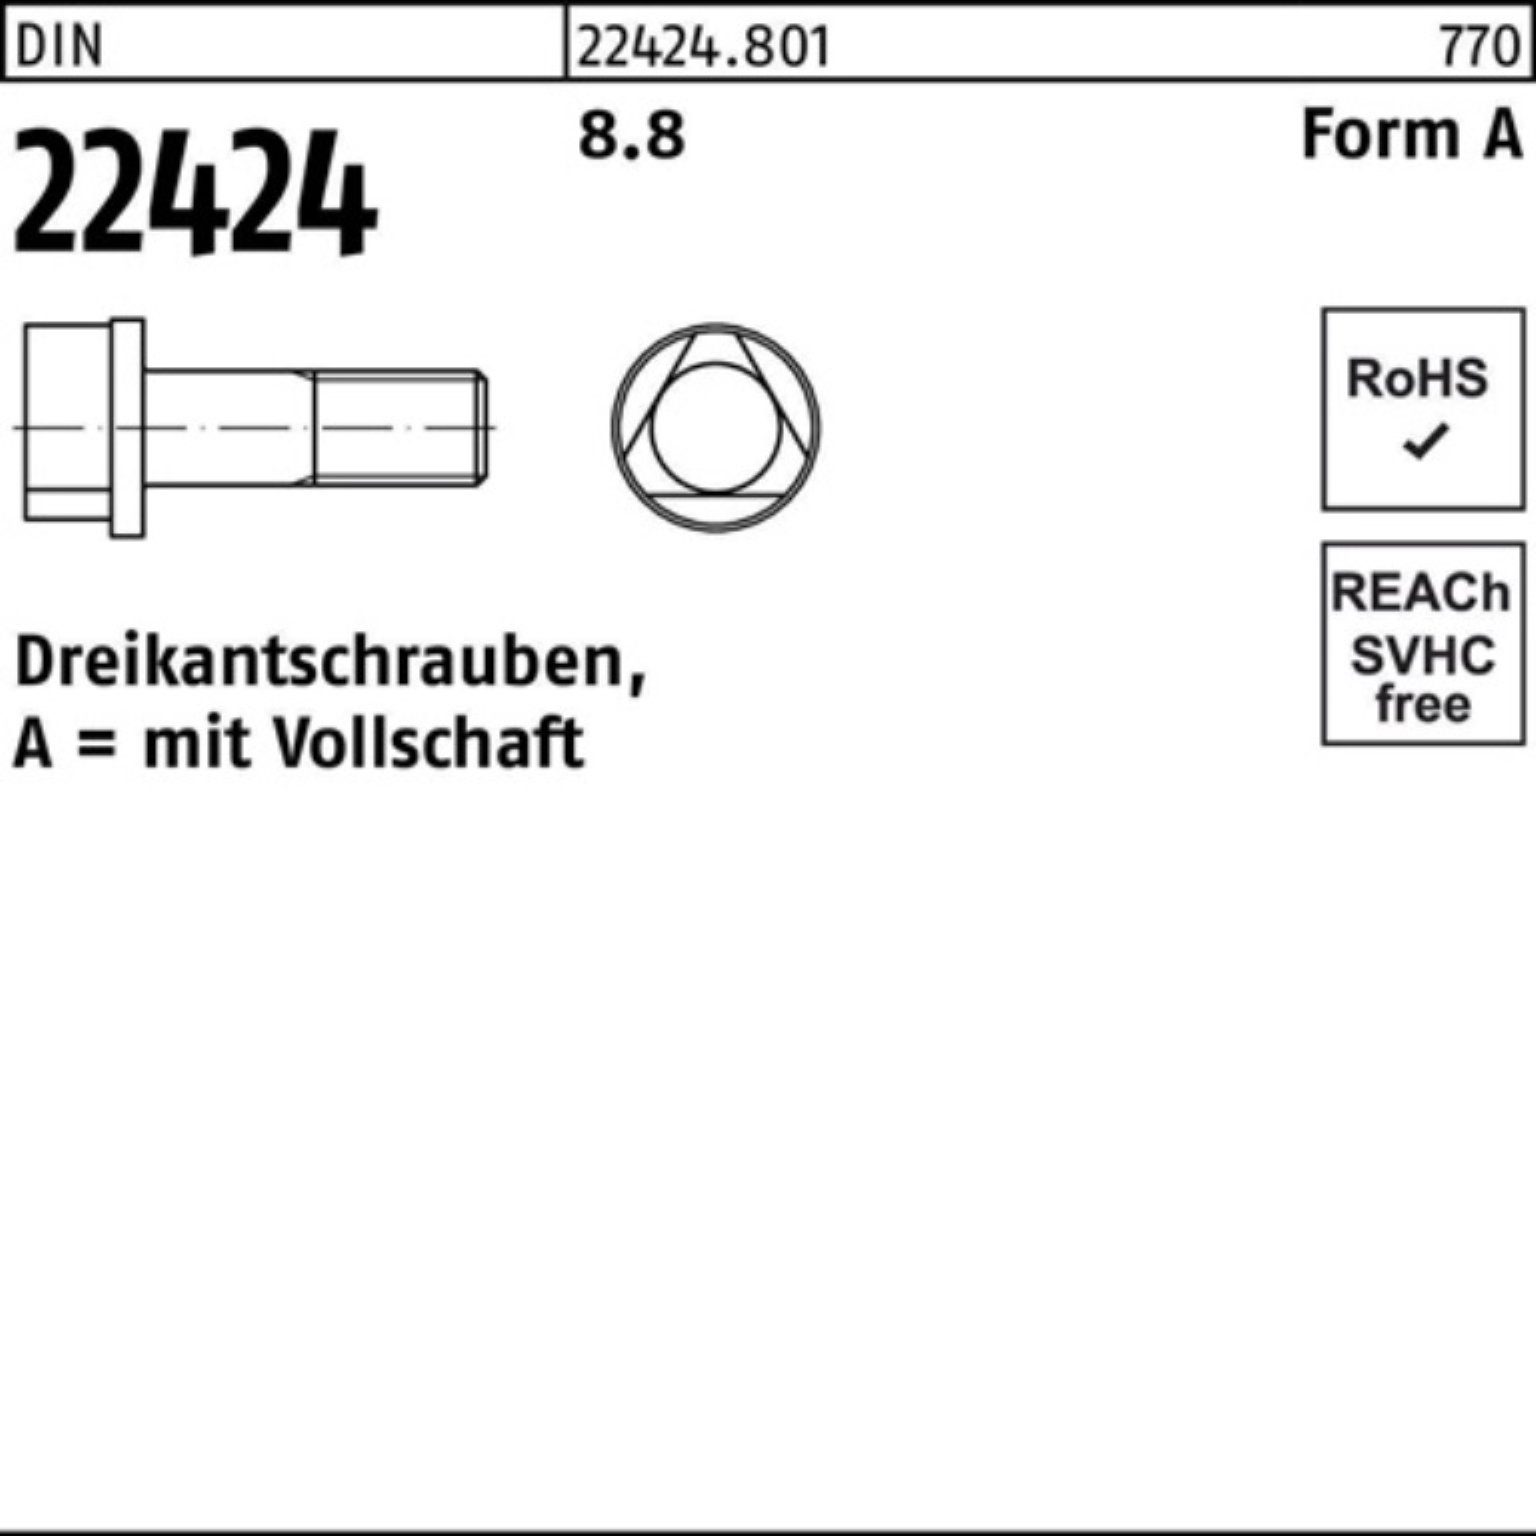 Reyher Schraube 100er Pack Dreikantschraube DIN 22424 FormA AM 8x 30 8.8 100 Stück DI